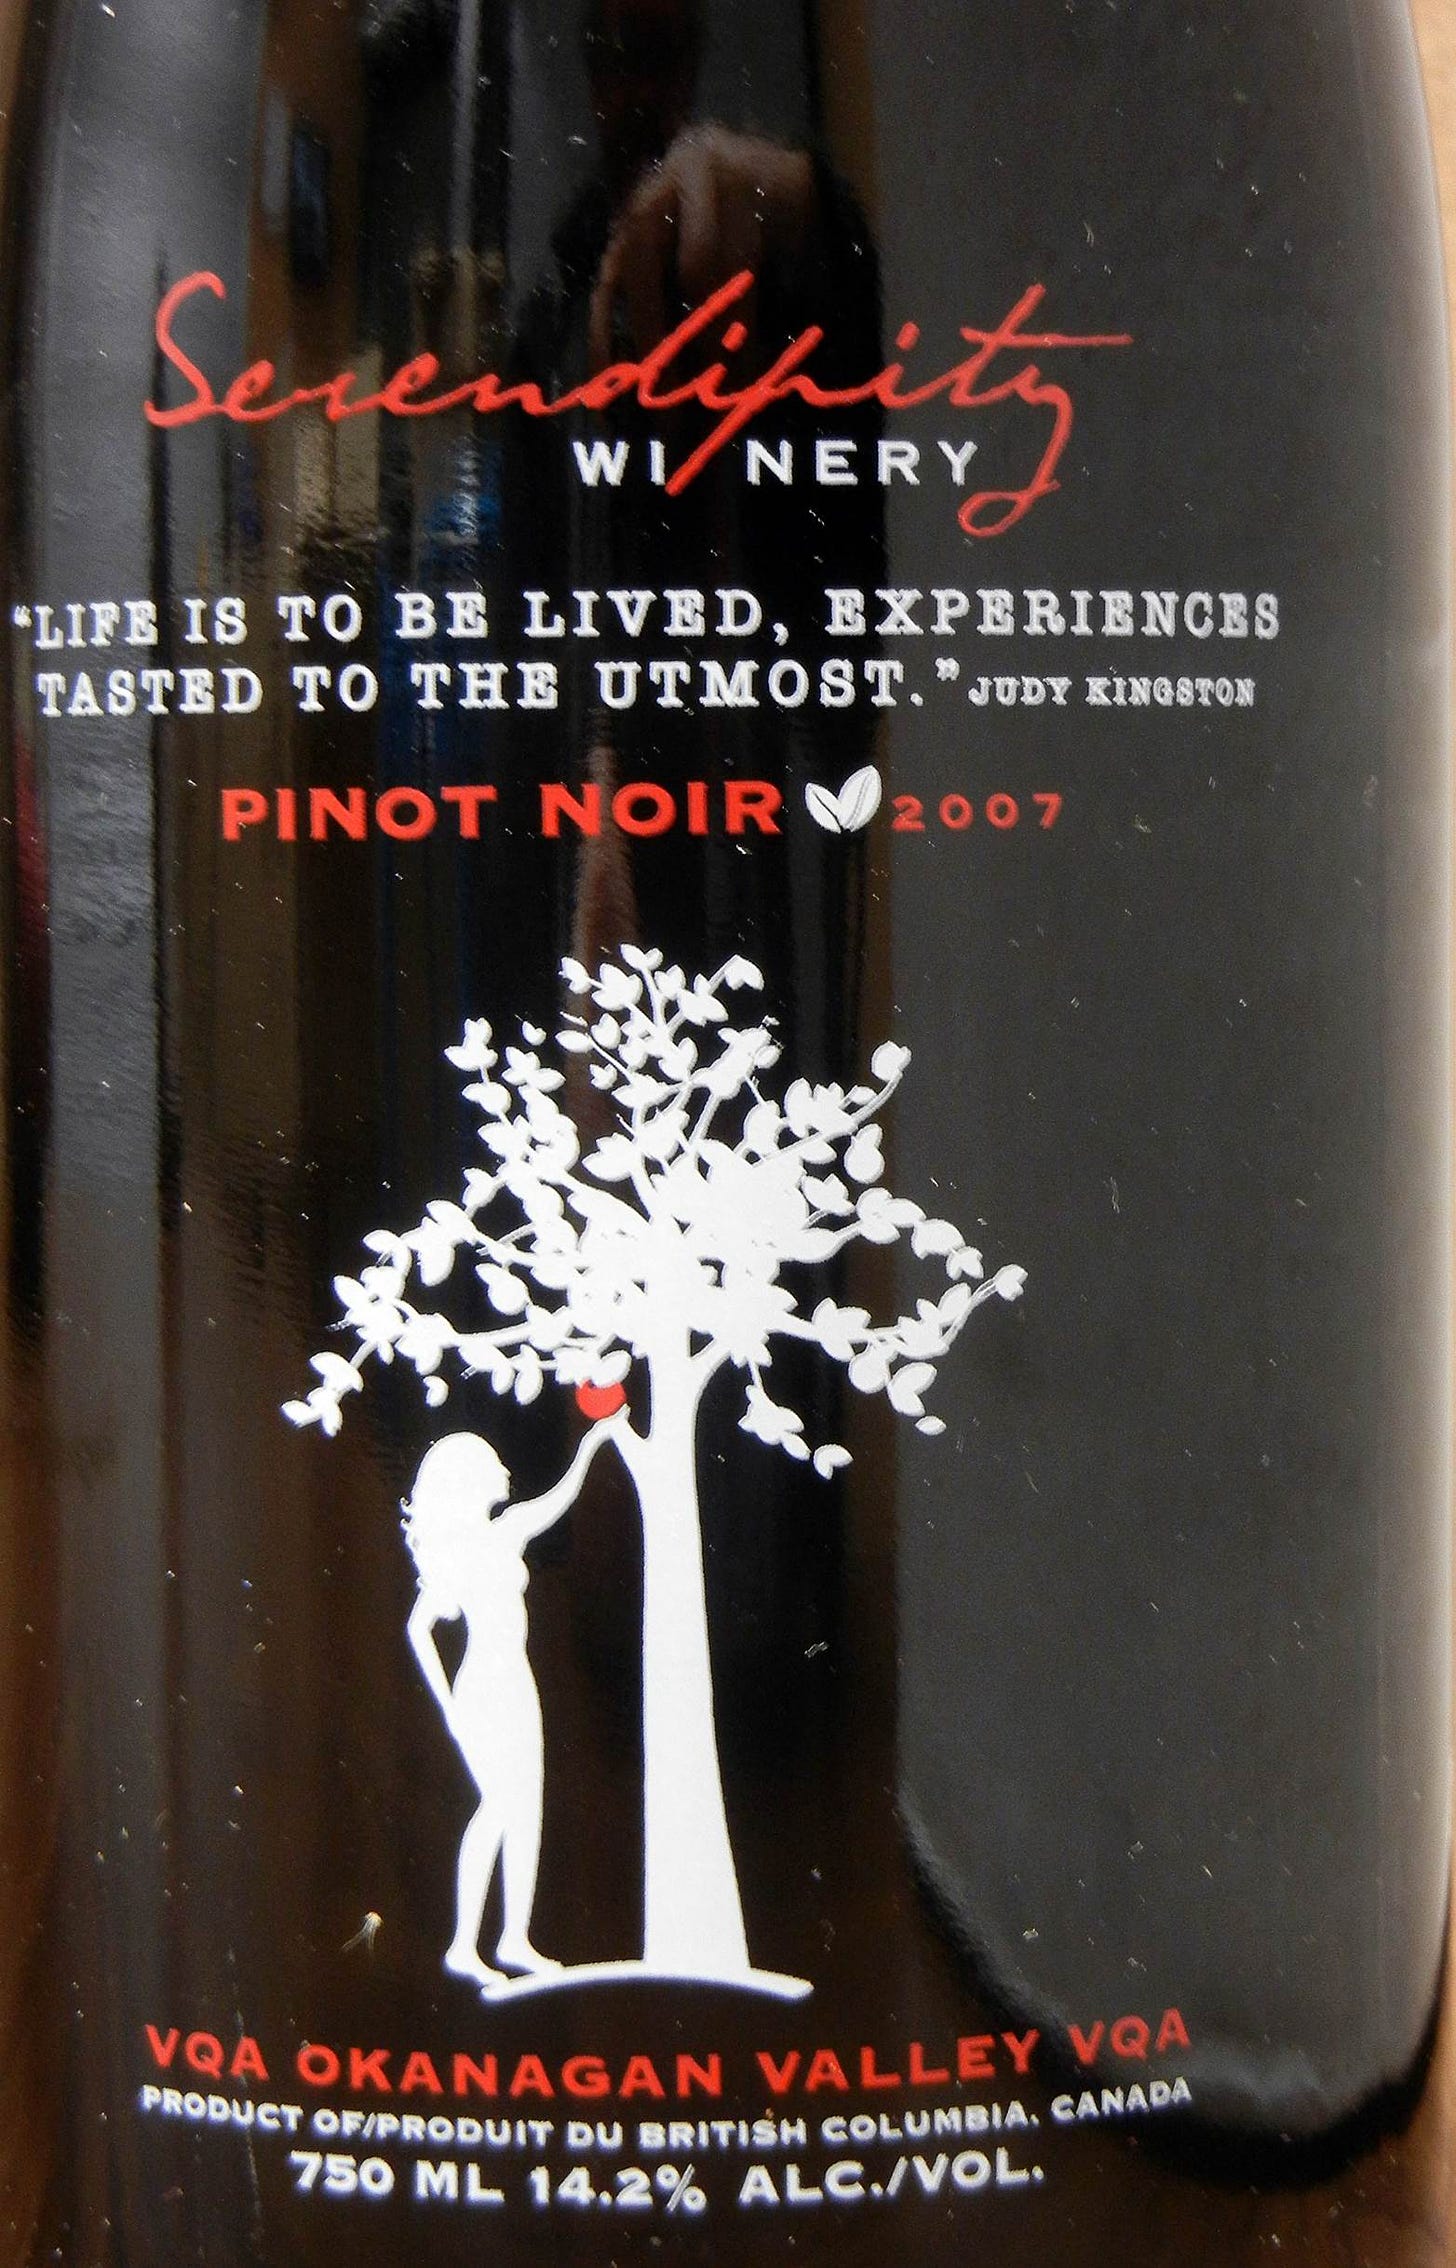 Serendipity Pinot Noir 2007 Label - BC Pinot Noir Tasting Review 23 